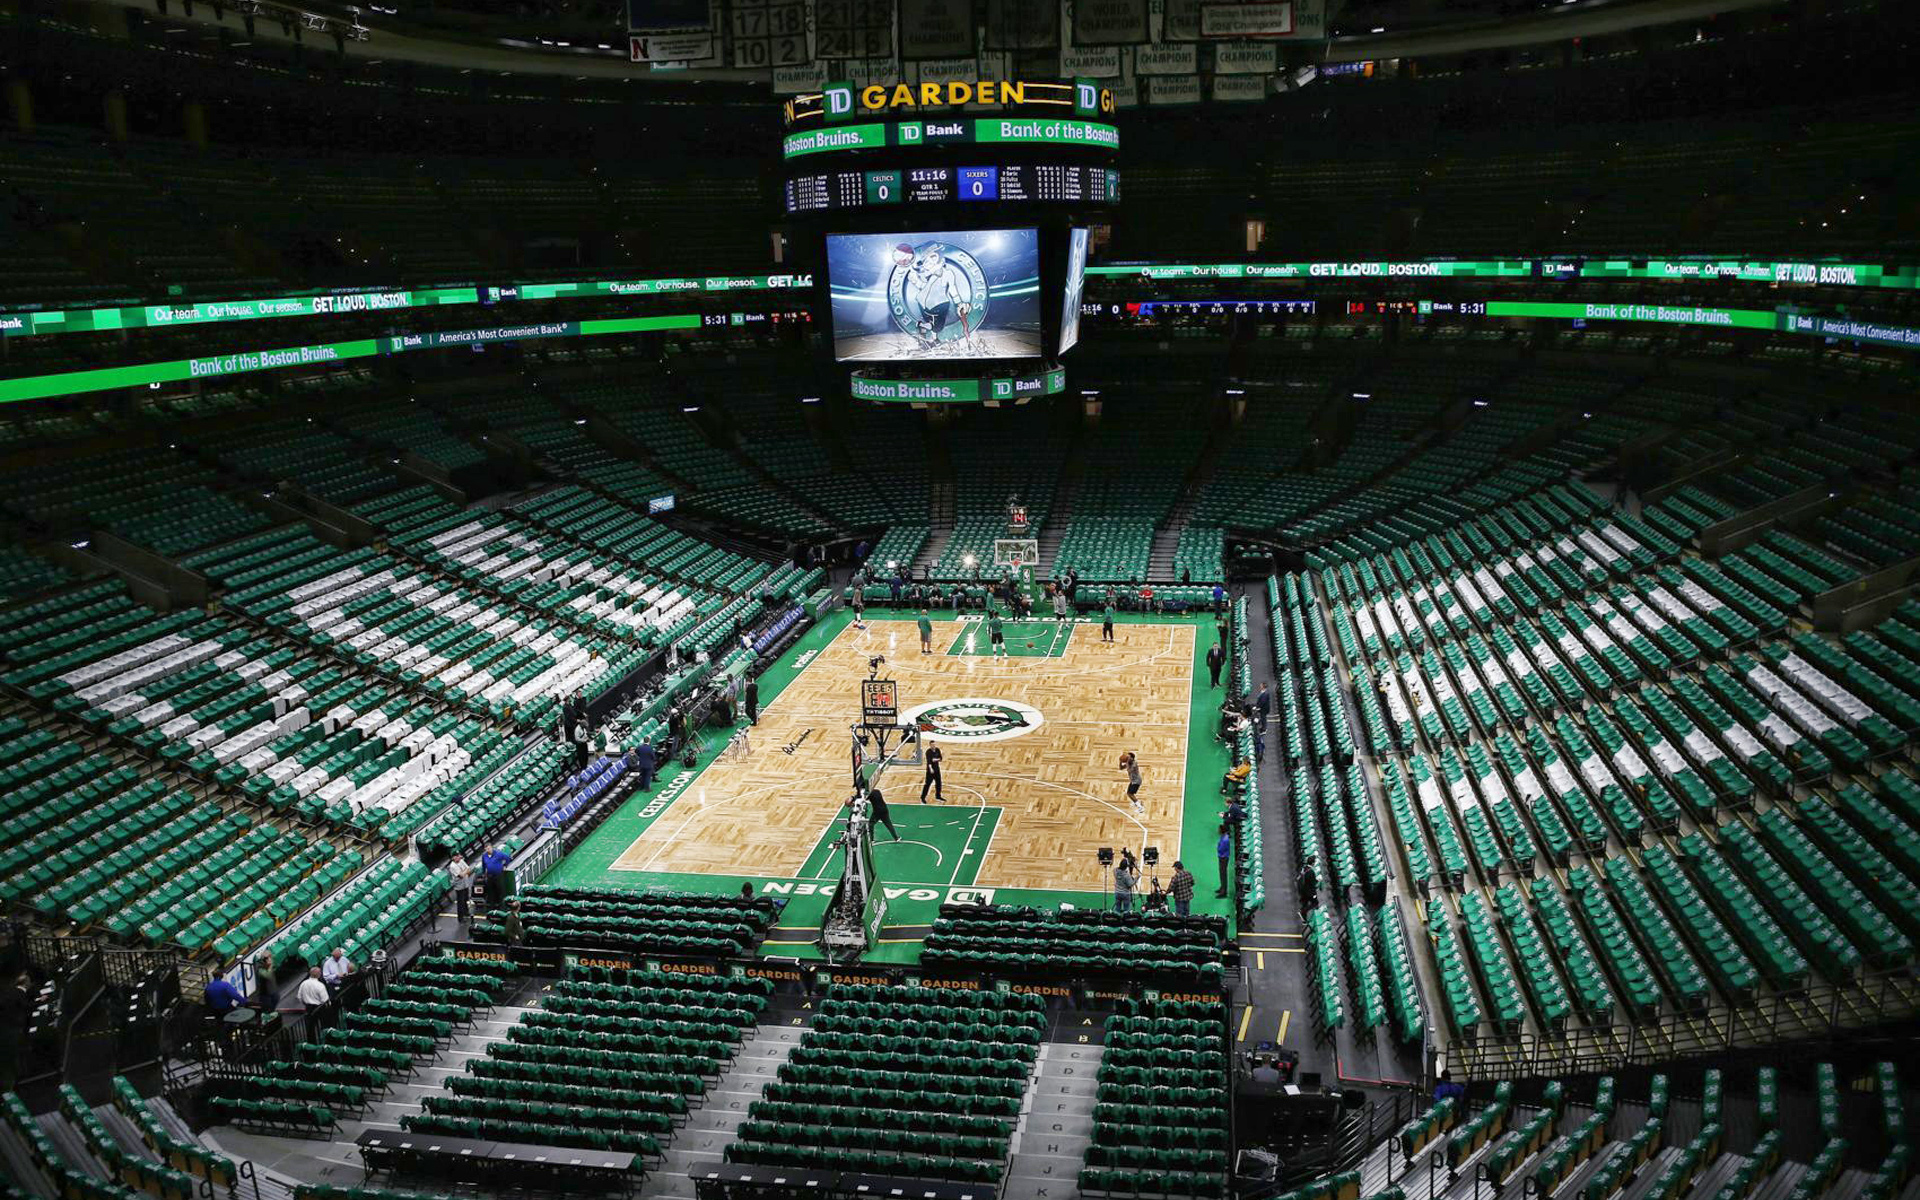 Download wallpapers TD Garden FleetCenter Boston Celtics Arena NBA